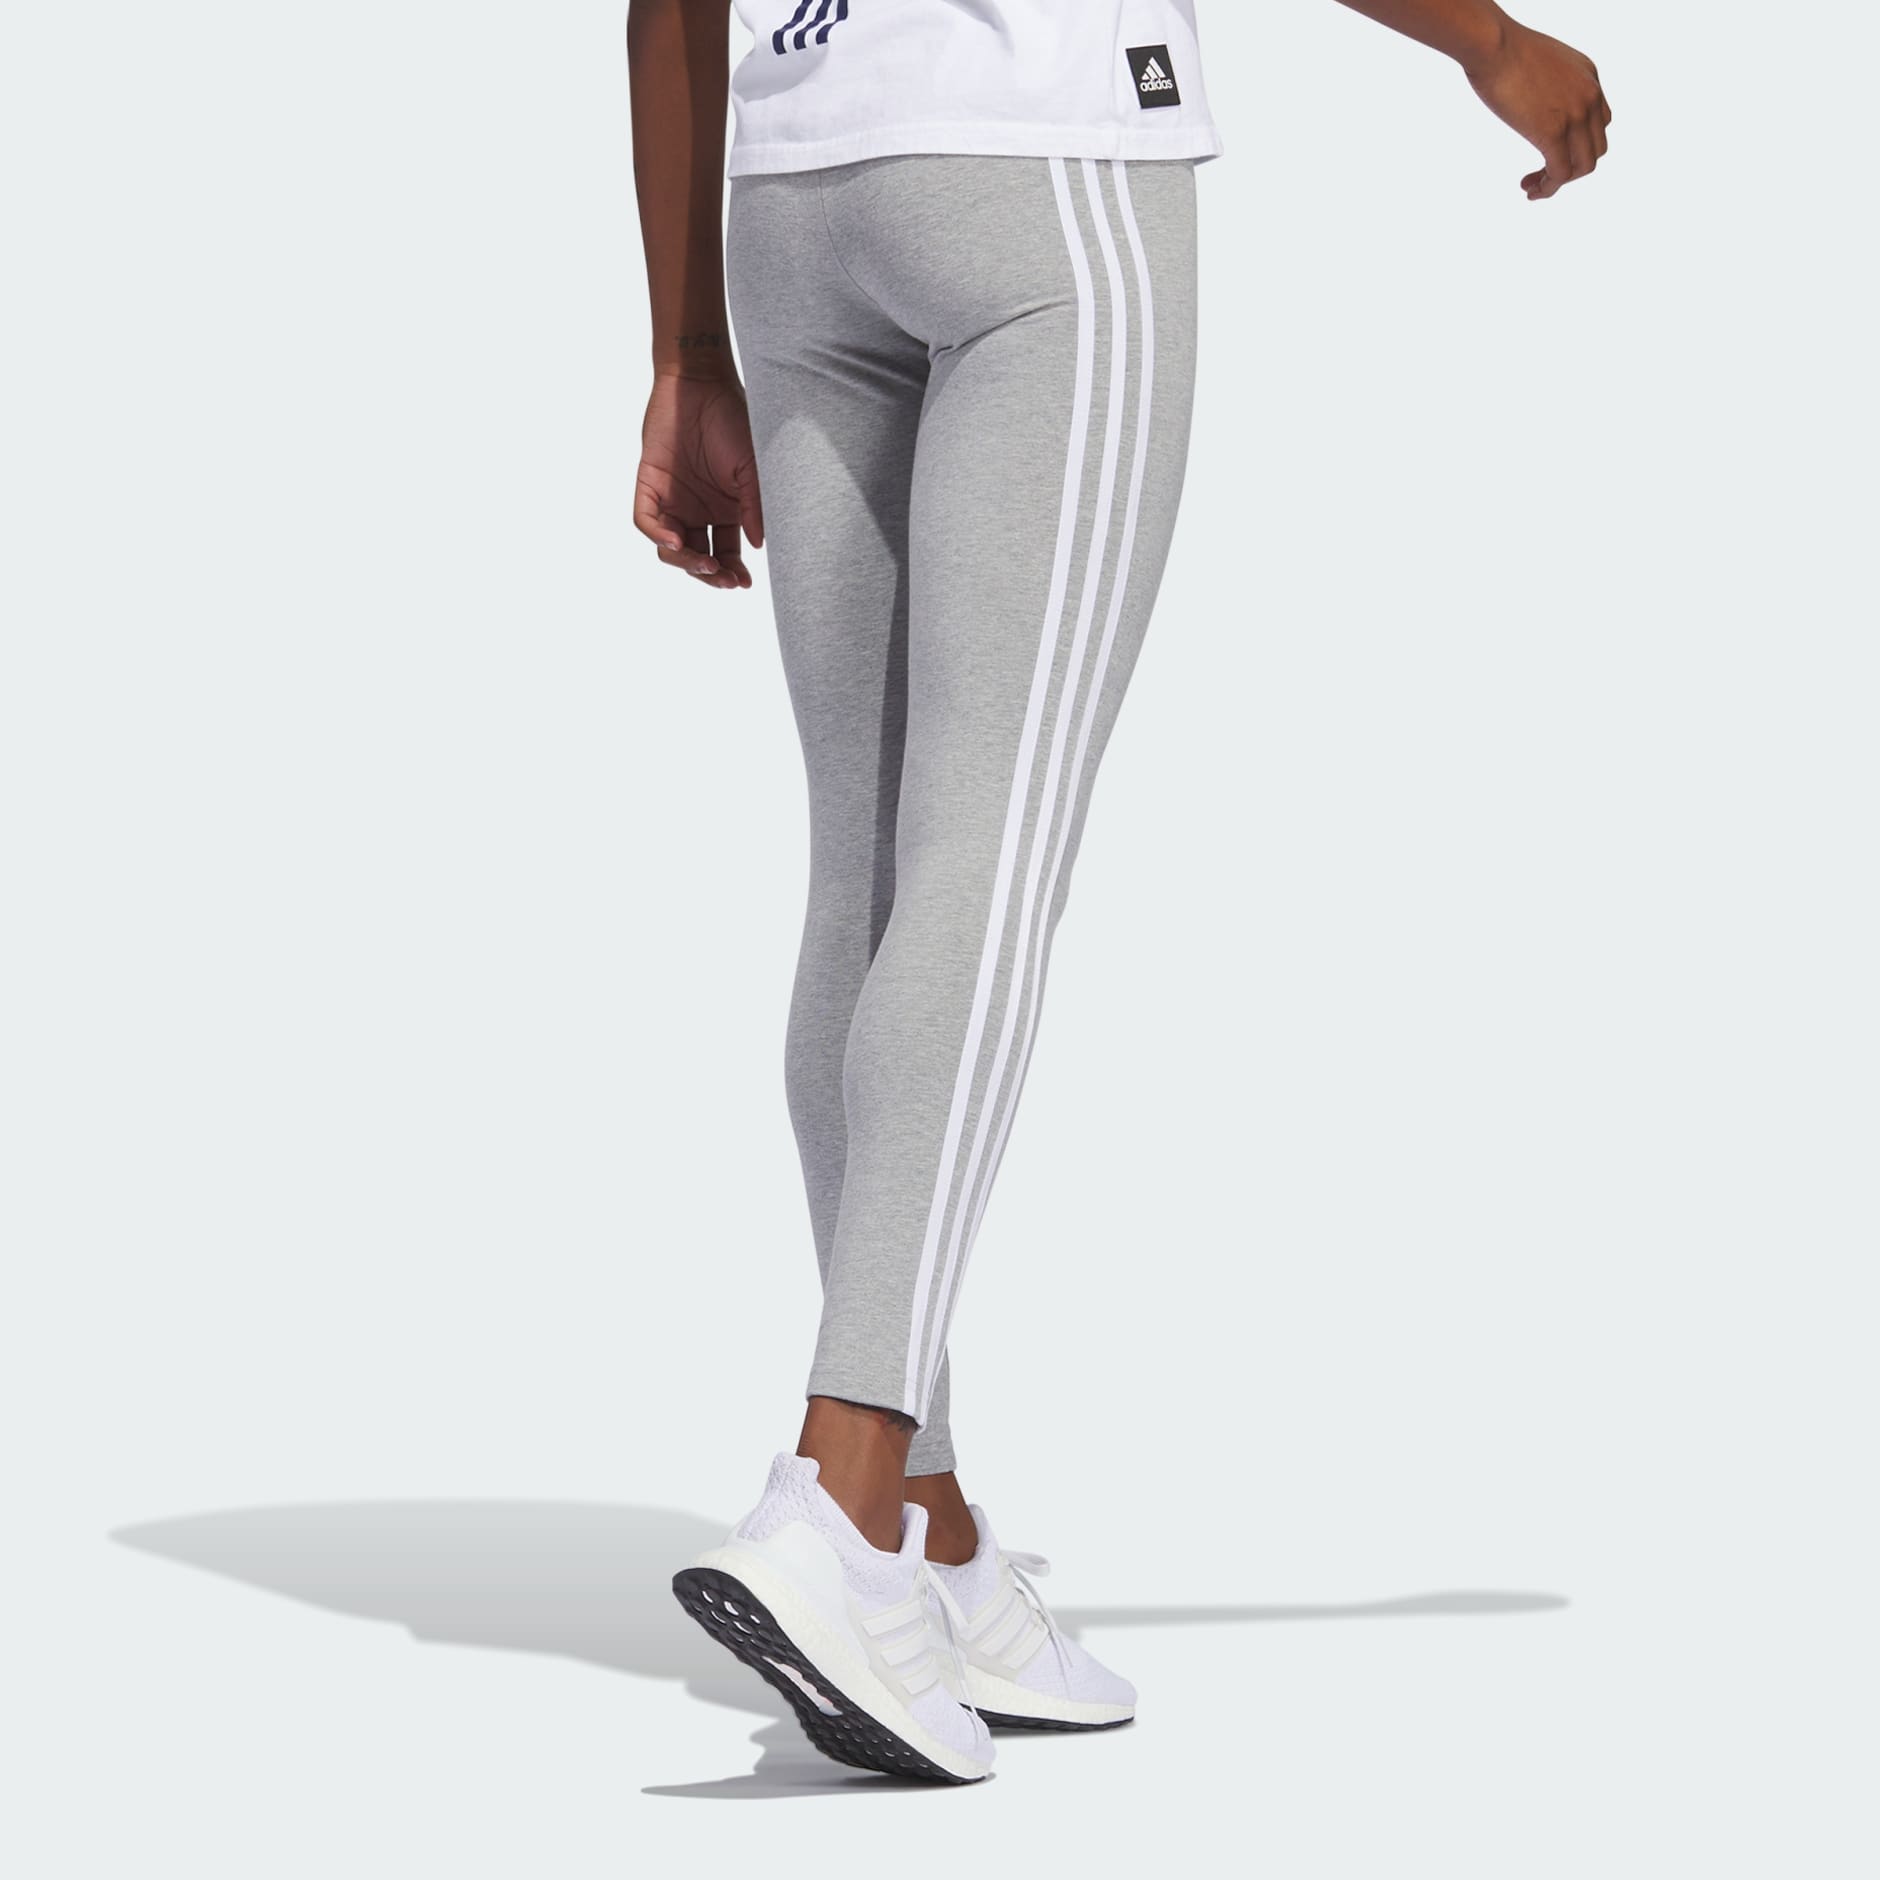 Buy adidas Women's Standard Essentials 3-Stripes Leggings, Dark Grey  Heather/Rose Tone, X-Small at Amazon.in